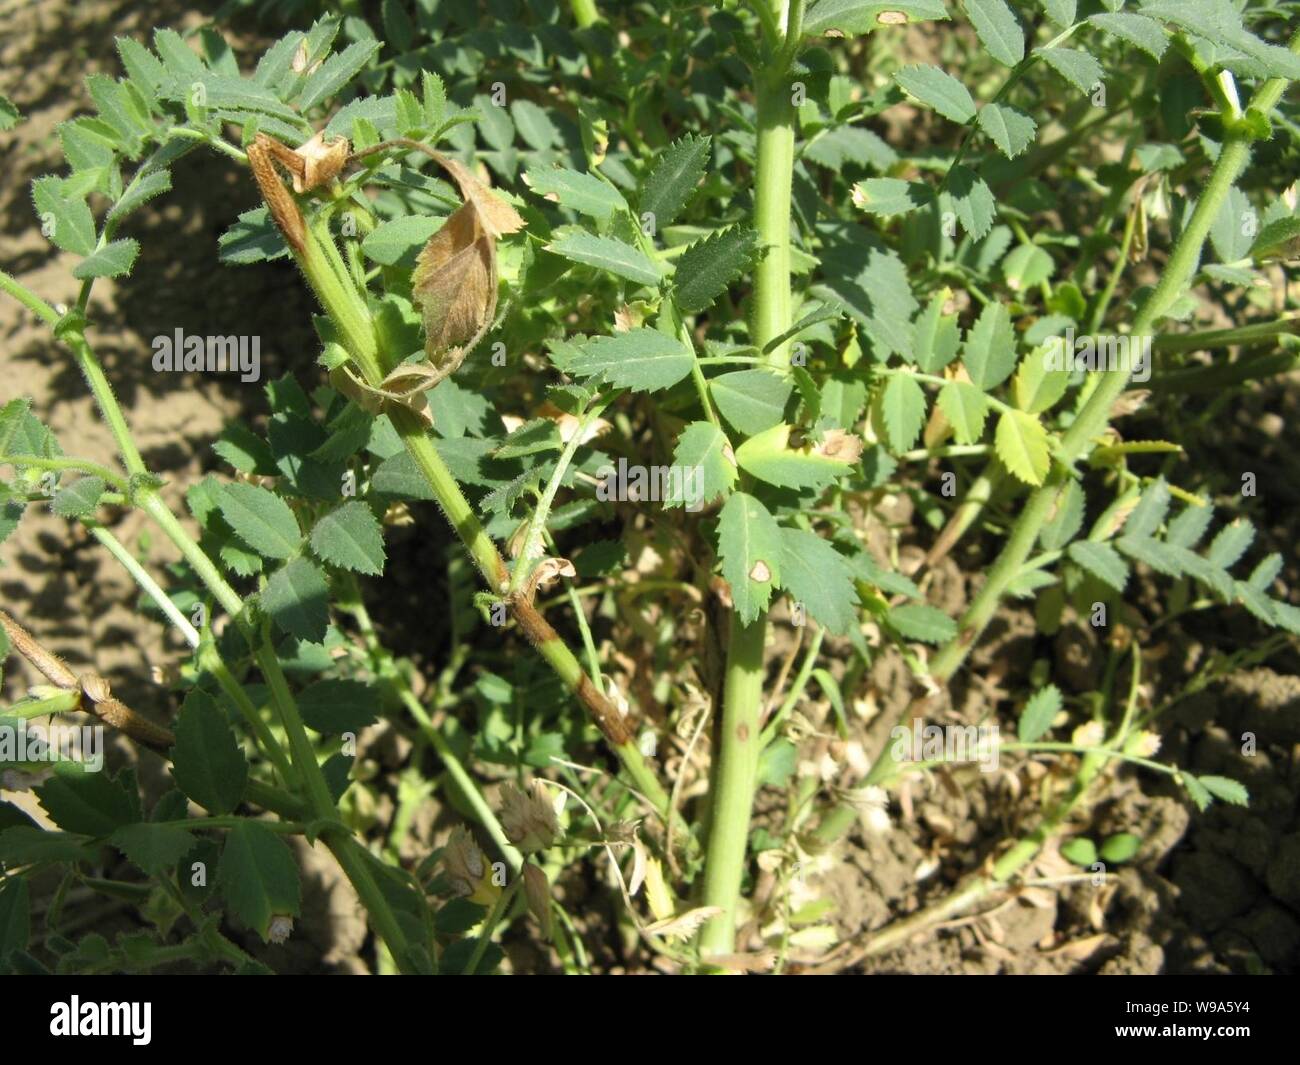 Didymella rabiei (Kichererbse ascochyta blight Pilz). Stockfoto